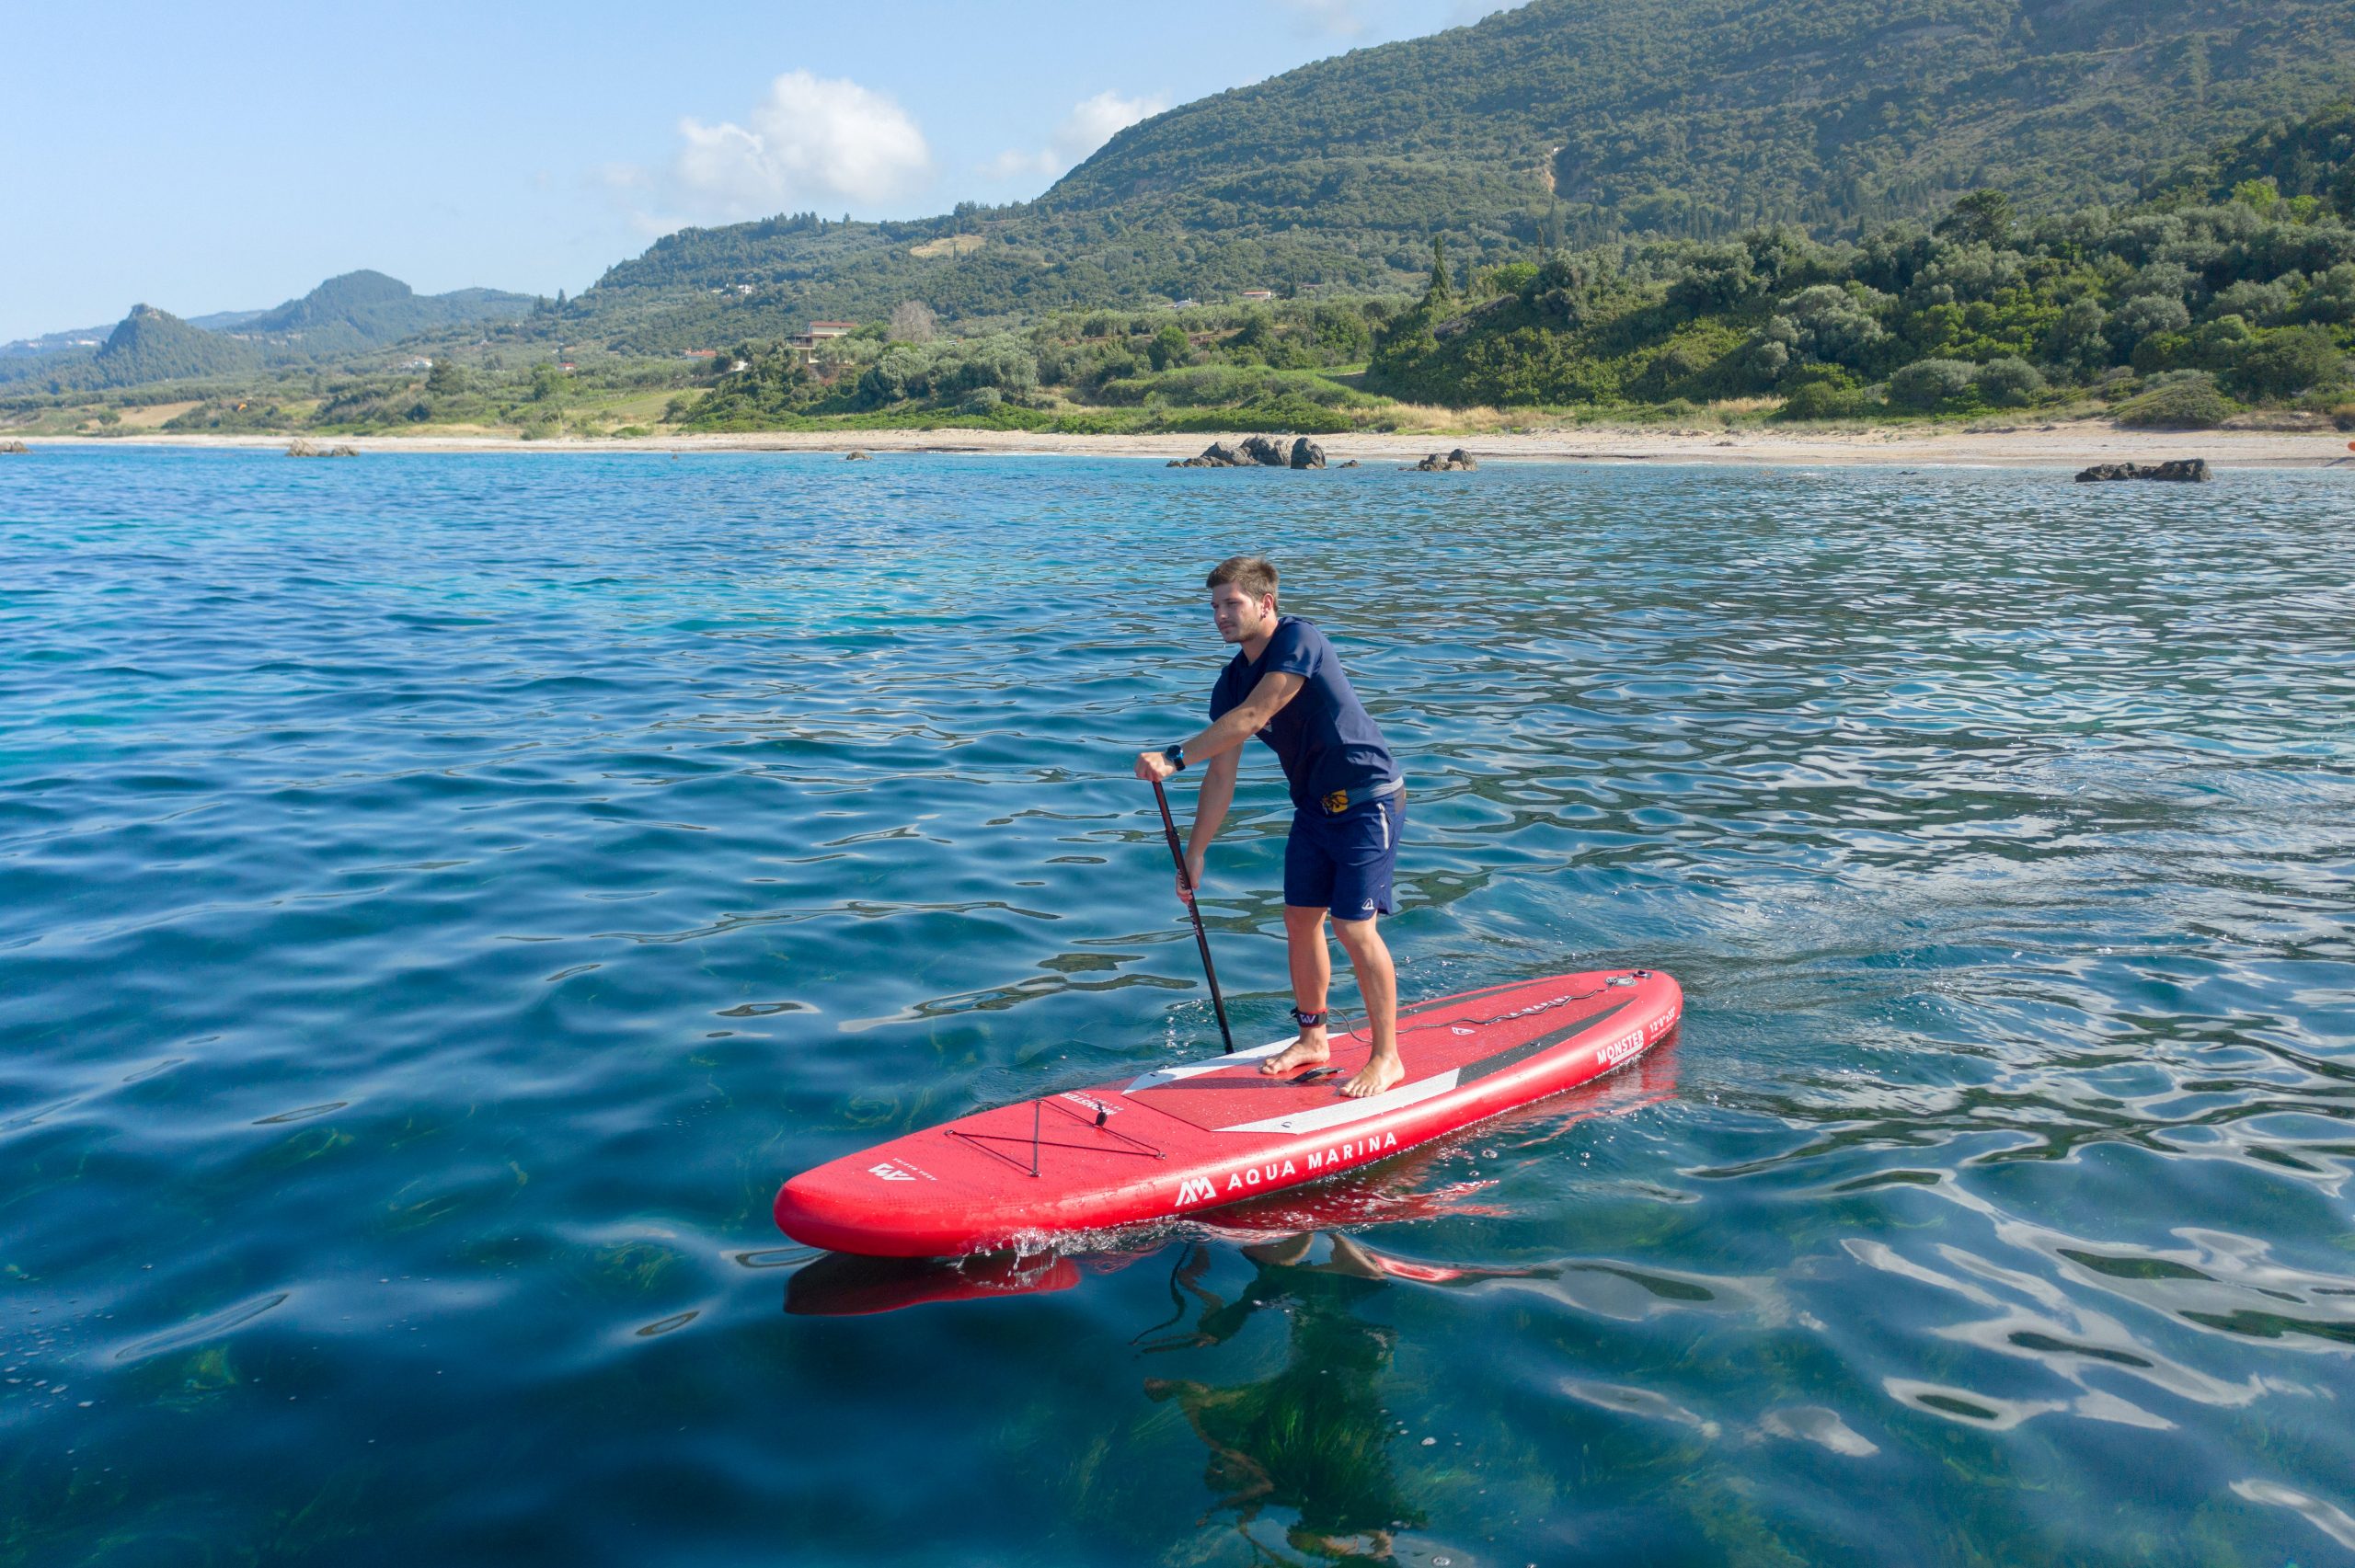 Tabla Paddle Surf Aqua Marina Breeze 9'10” - Verde - All-around Series